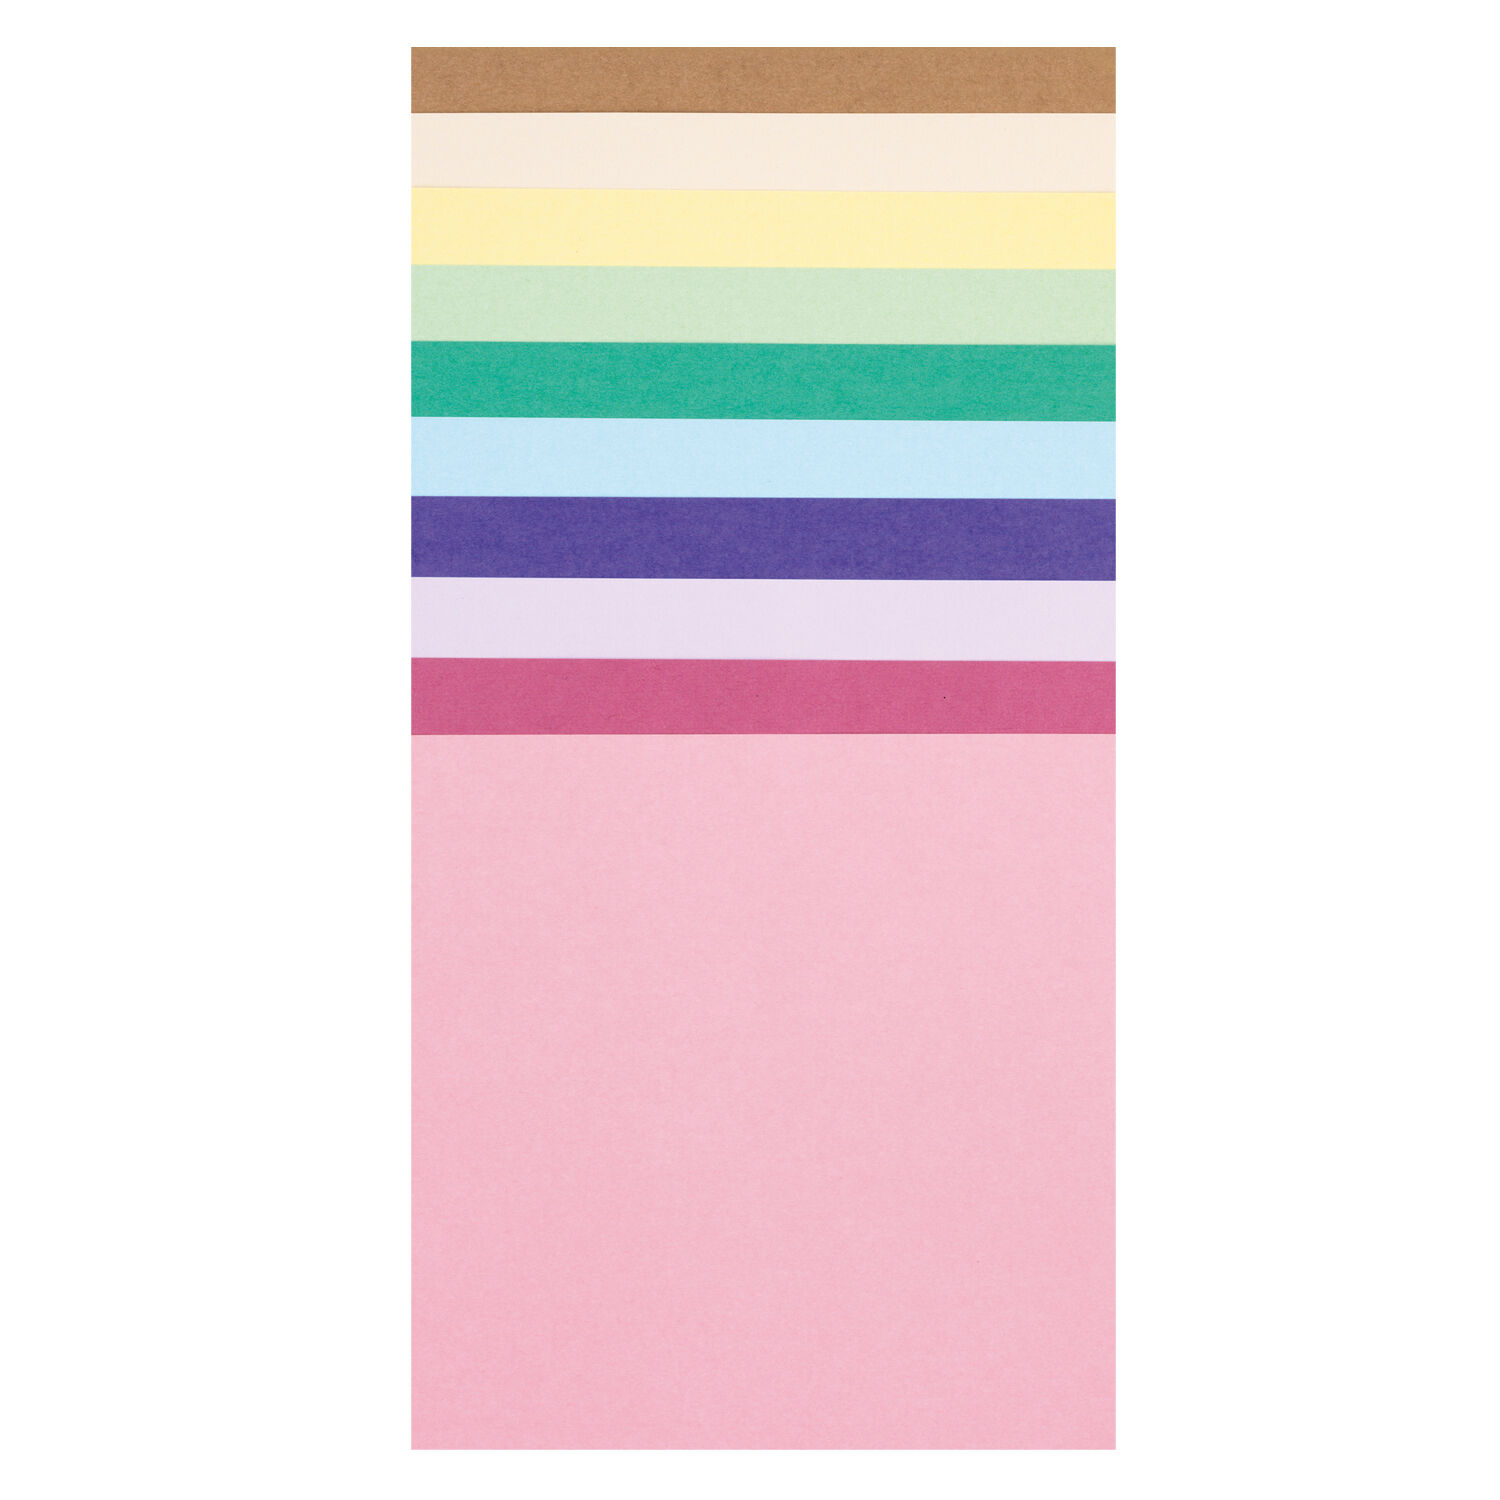 NEU Faltbltter Pastell, 100 Blatt in 10 Farben sortiert, 70g/m, 10x10cm Bild 2